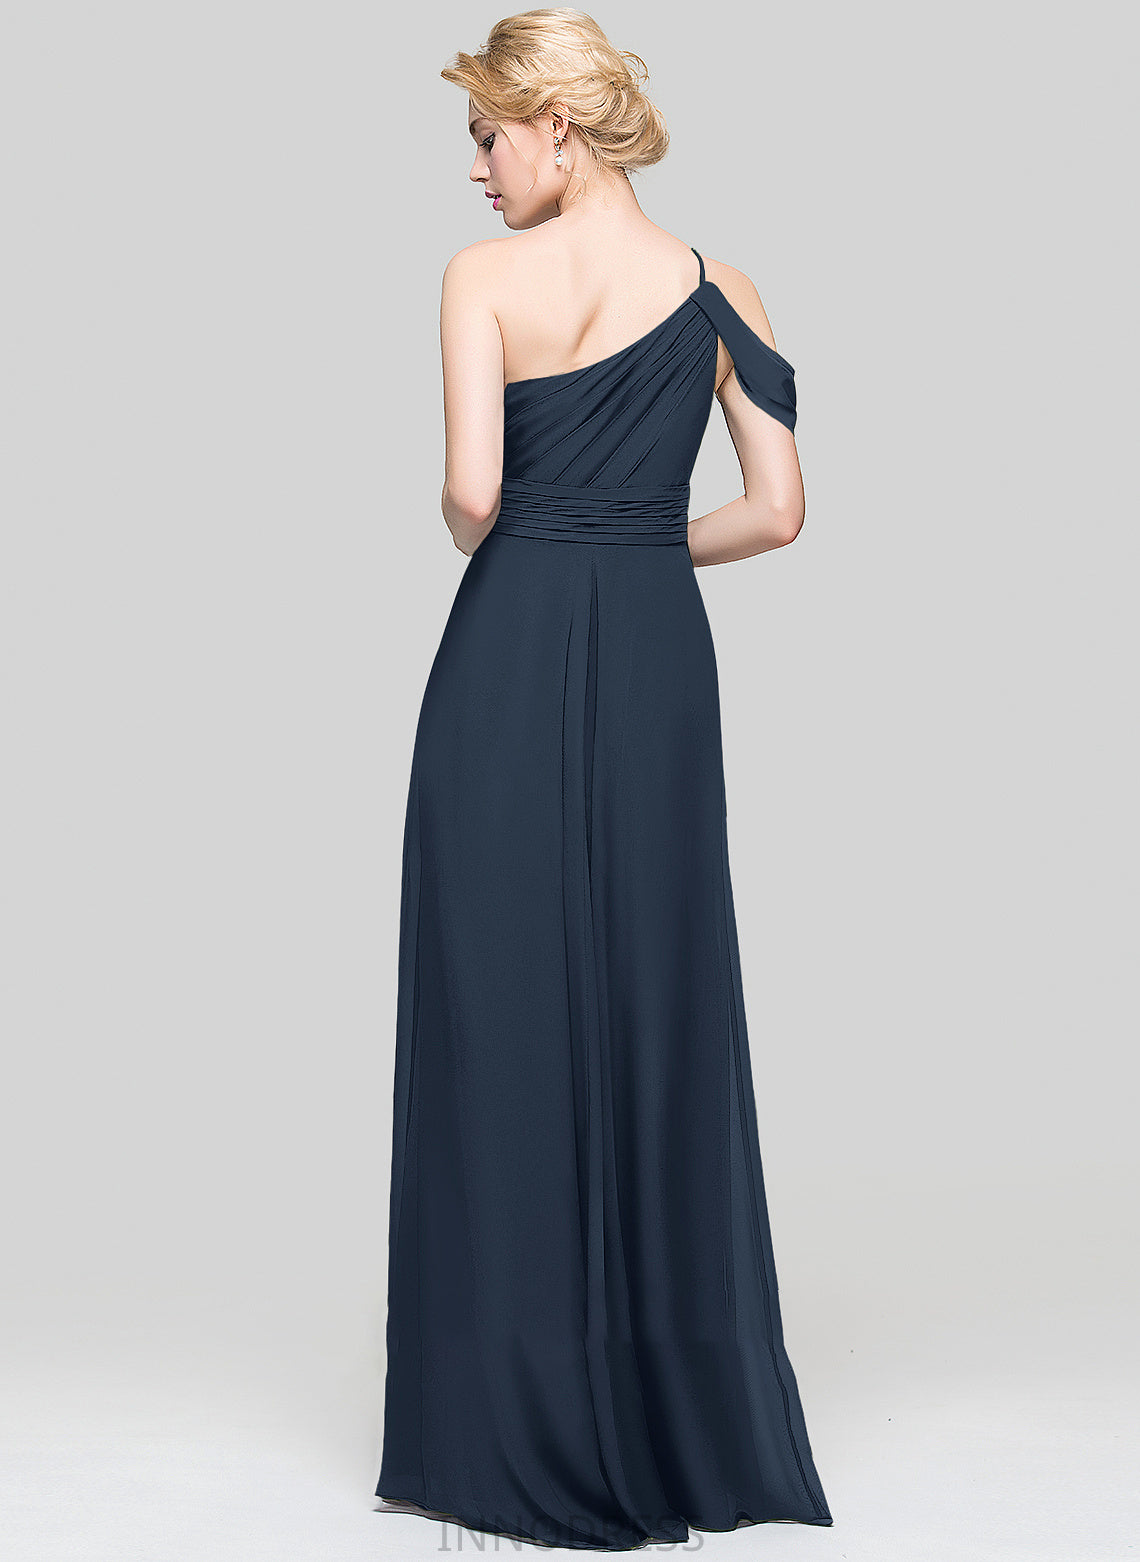 Neckline Ruffle Embellishment Fabric One-Shoulder Length Floor-Length A-Line Silhouette Linda A-Line/Princess Sweetheart